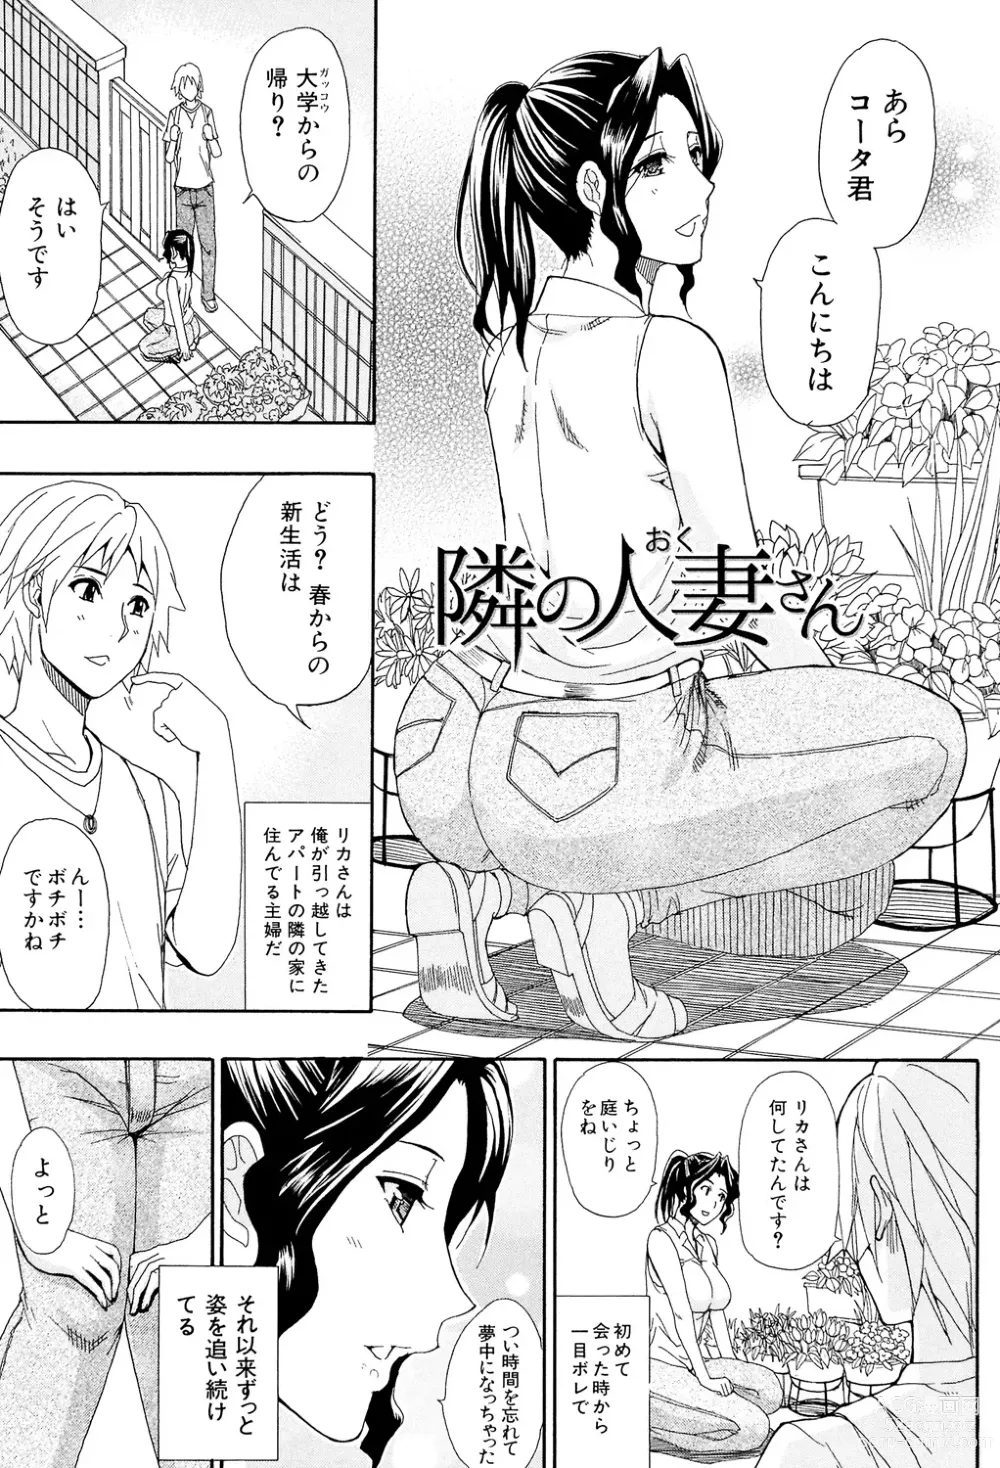 Page 191 of manga Hitokoishi, Tsuma